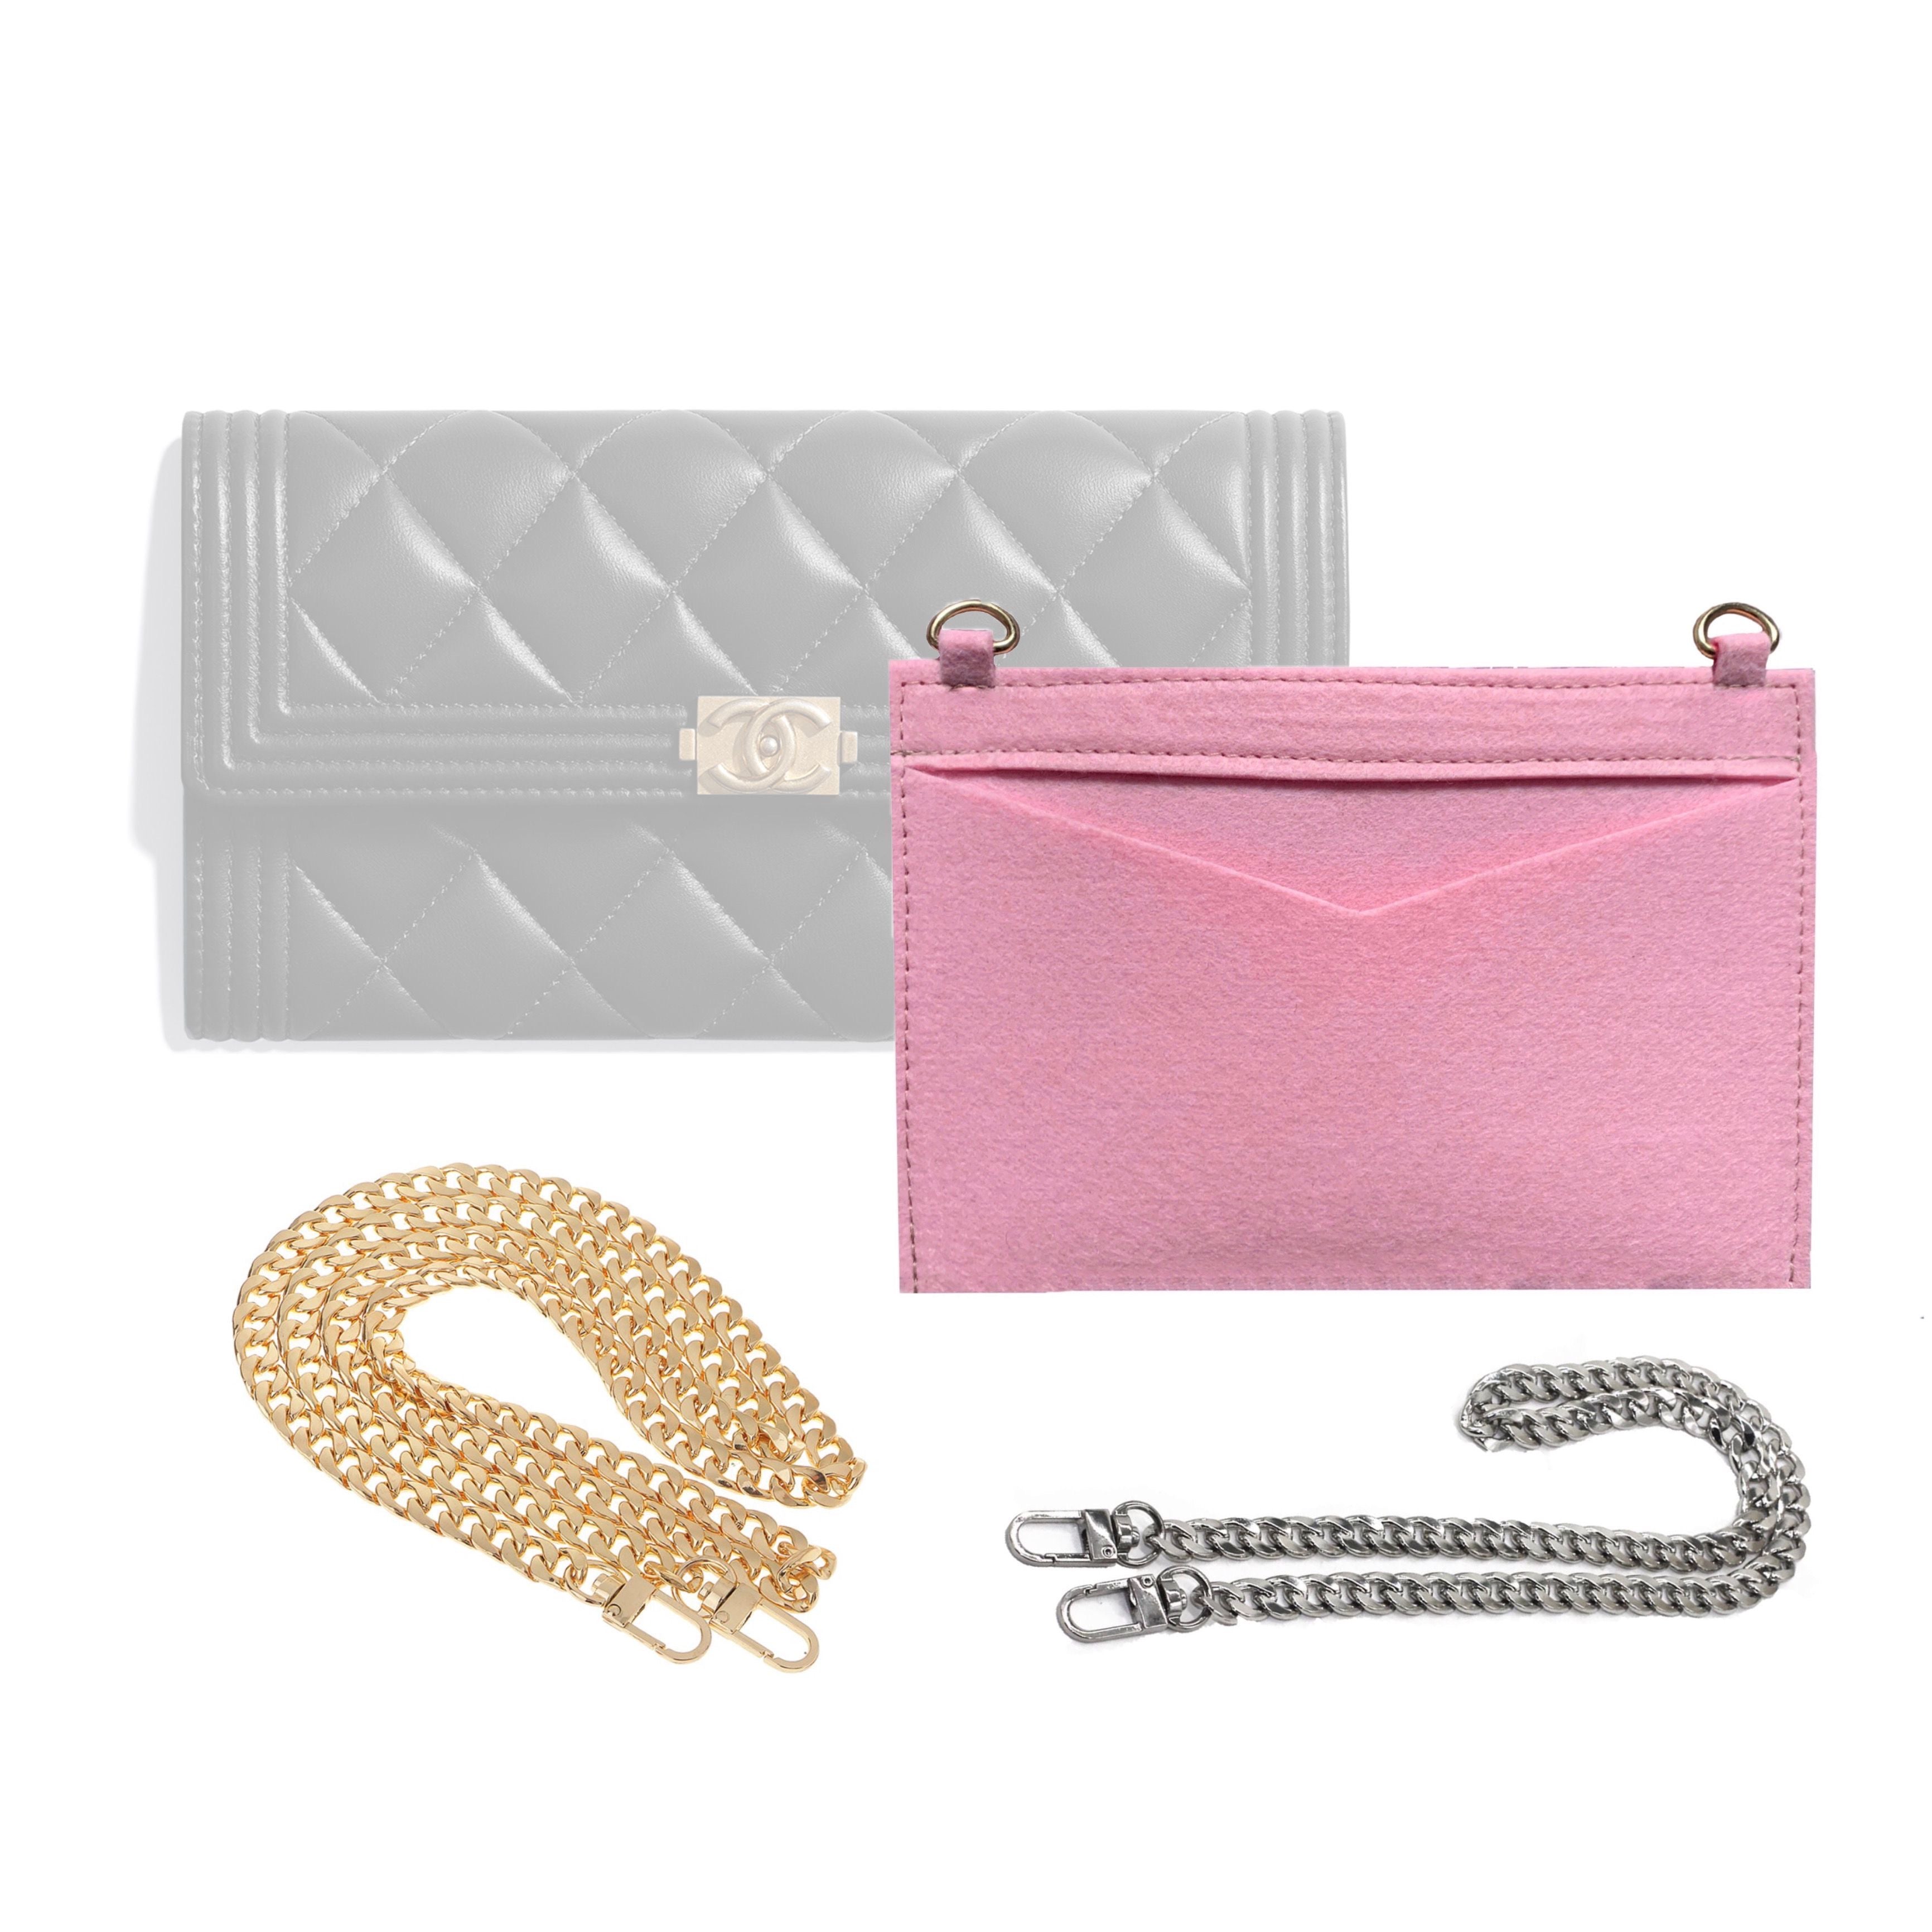 Conversion Kit for Boy Long Flap Wallet| Accessory for Gucci Swing | Chanel Strap | Designer Purse Insert | Chanel Handbag Strap | Bag Insert Organizer | Chanel Swing Strap | Luxury Bag Accessory | Bag Protector”